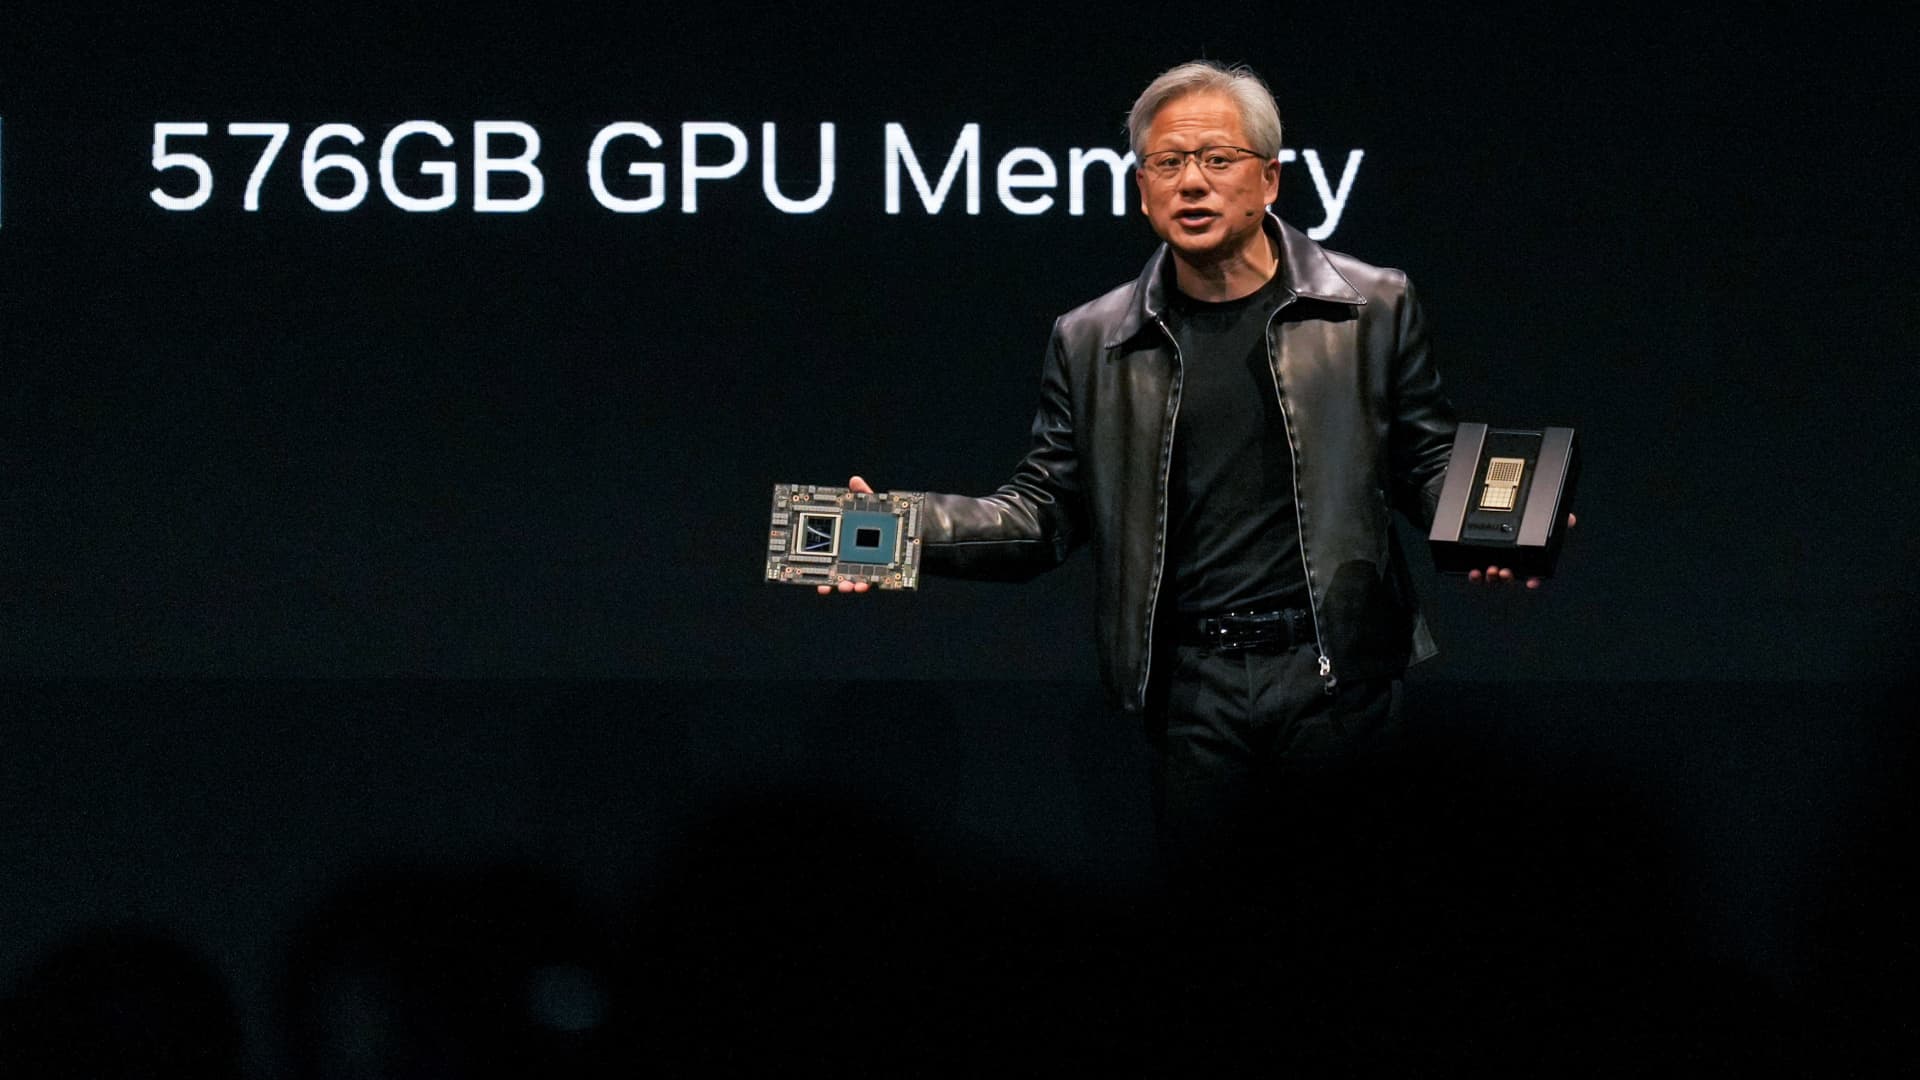 Nvidia's stock closes at record after Google AI partnership